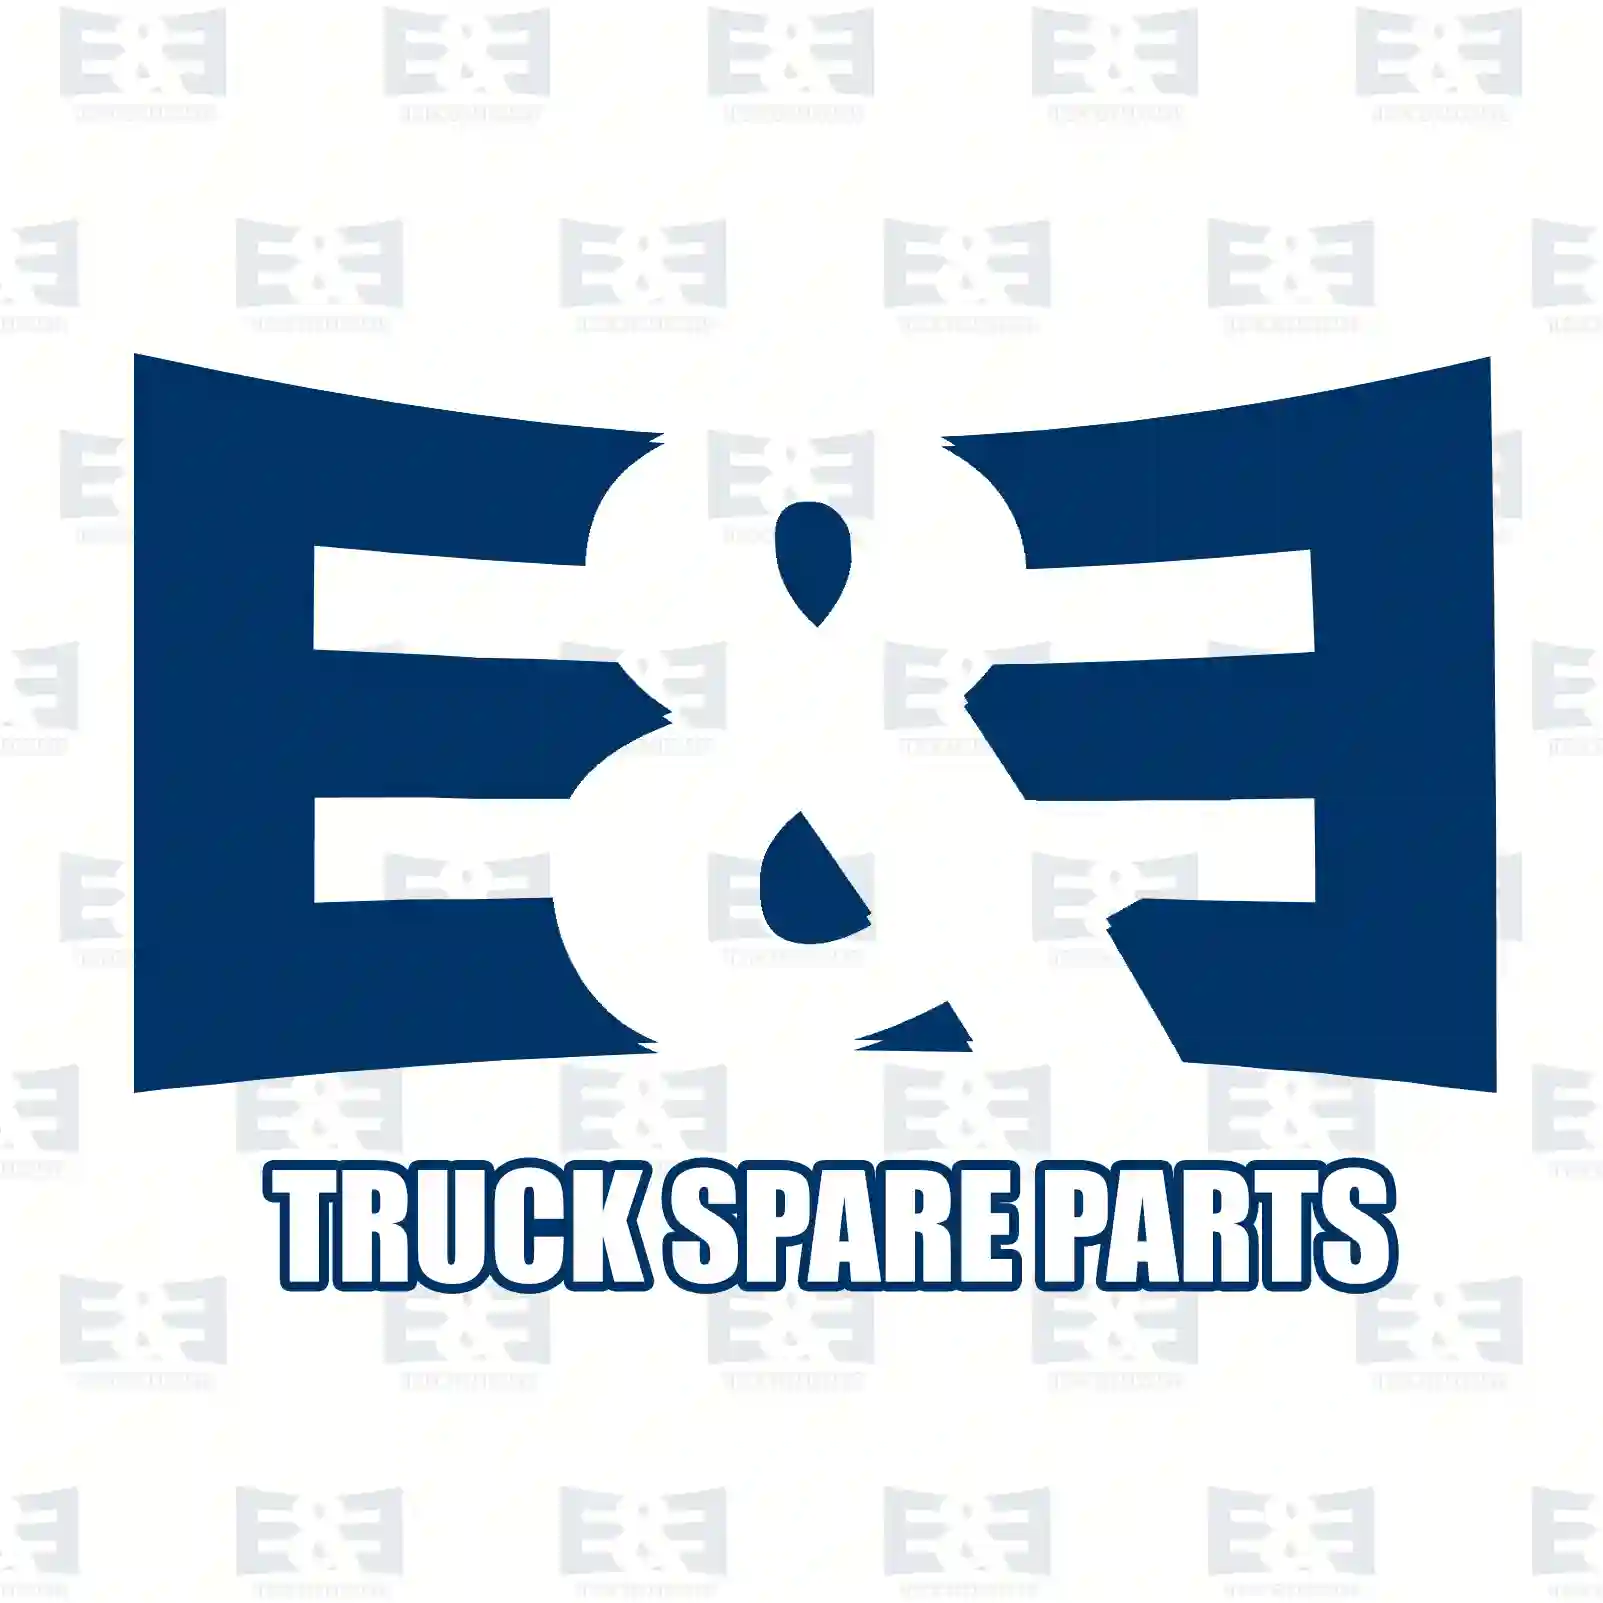 Ball joint, right hand thread, 2E2277716, 5010245365, 5010245365, ZG40146-0008 ||  2E2277716 E&E Truck Spare Parts | Truck Spare Parts, Auotomotive Spare Parts Ball joint, right hand thread, 2E2277716, 5010245365, 5010245365, ZG40146-0008 ||  2E2277716 E&E Truck Spare Parts | Truck Spare Parts, Auotomotive Spare Parts